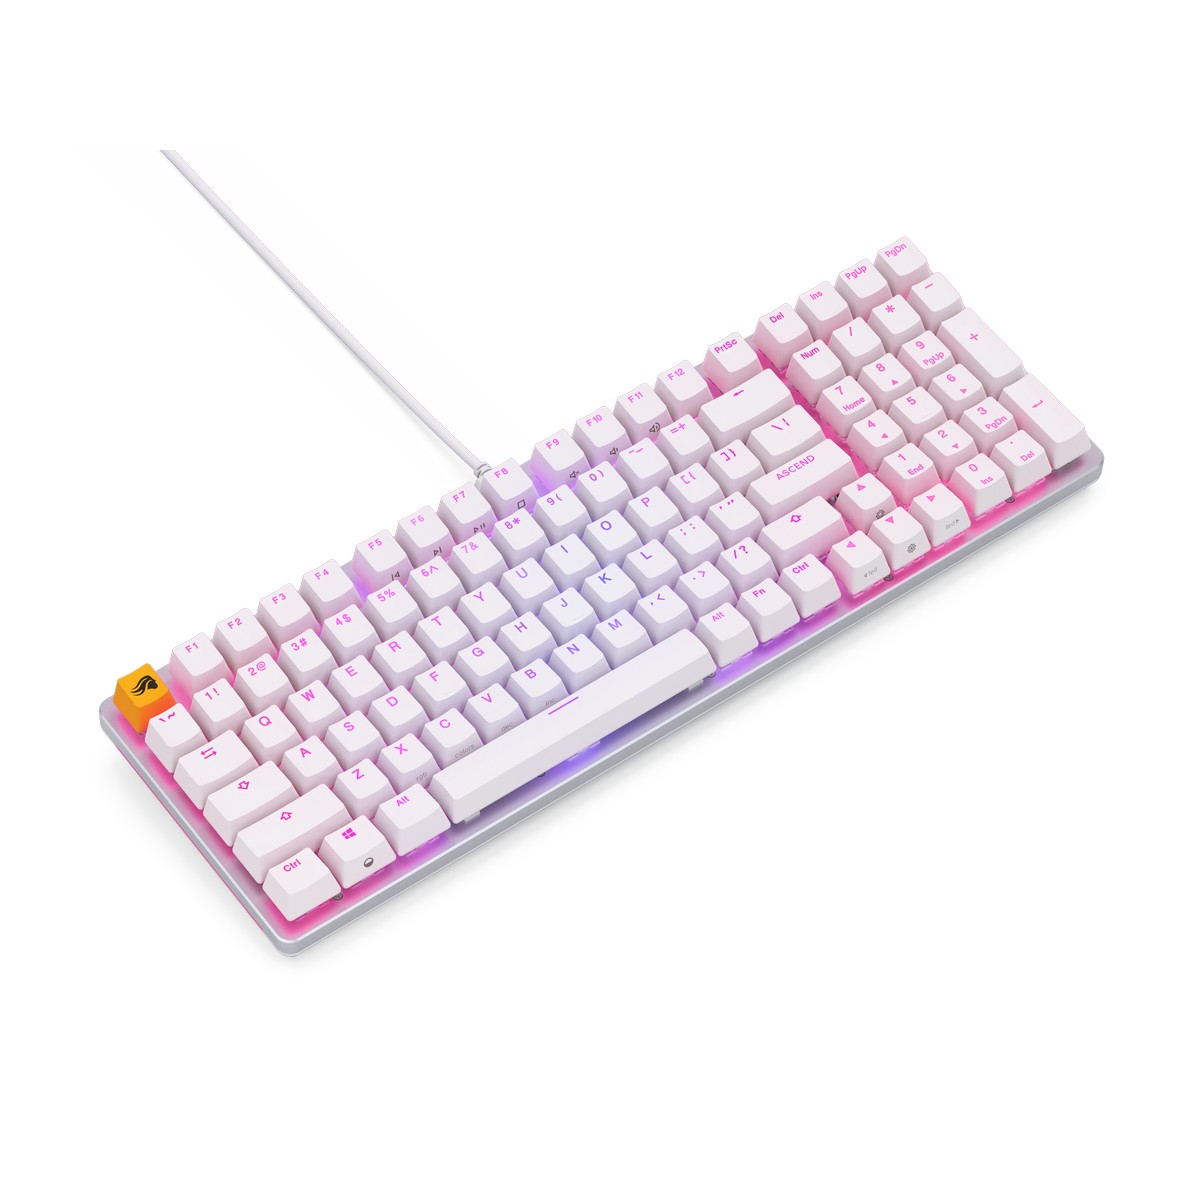 Glorious - Glorious GMMK 2 96% Mechanical Gaming Keyboard - Fox switch ANSI-US - White